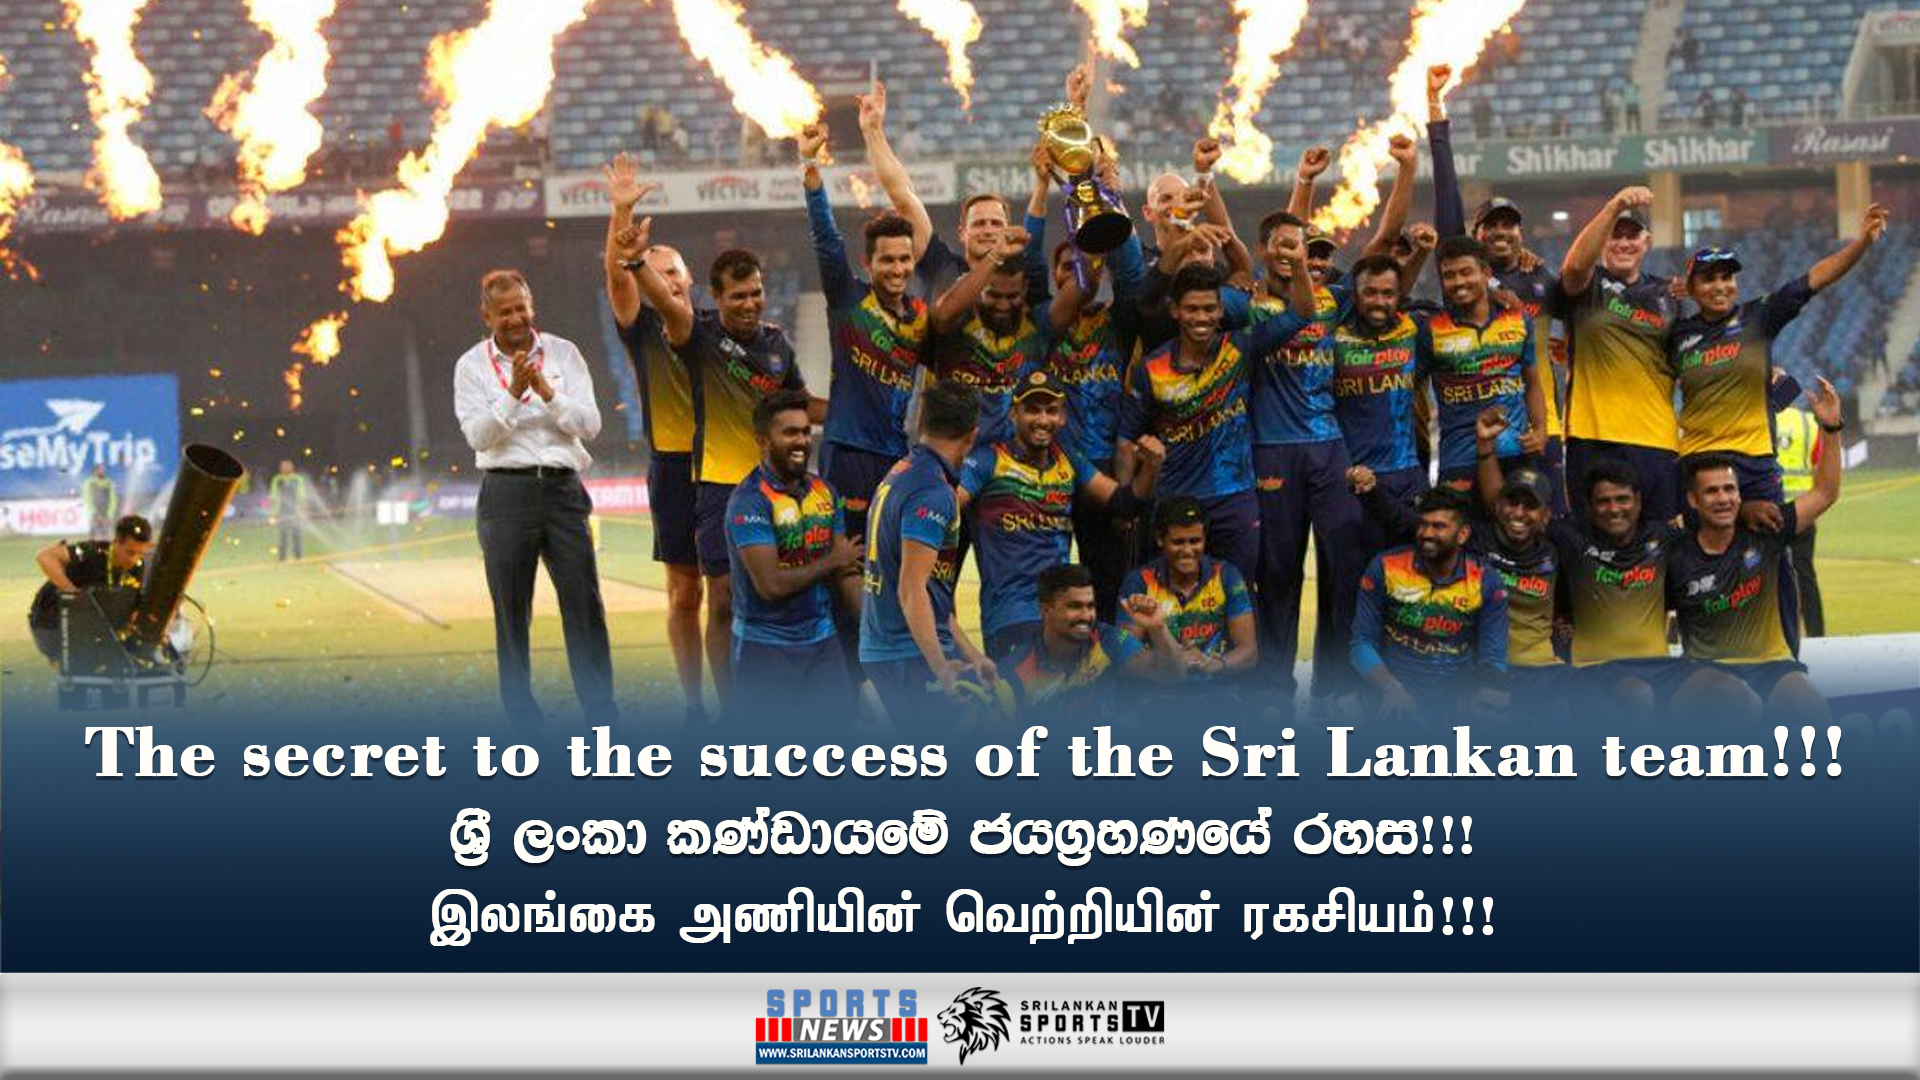 The secret to the success of the Sri Lankan team!!!